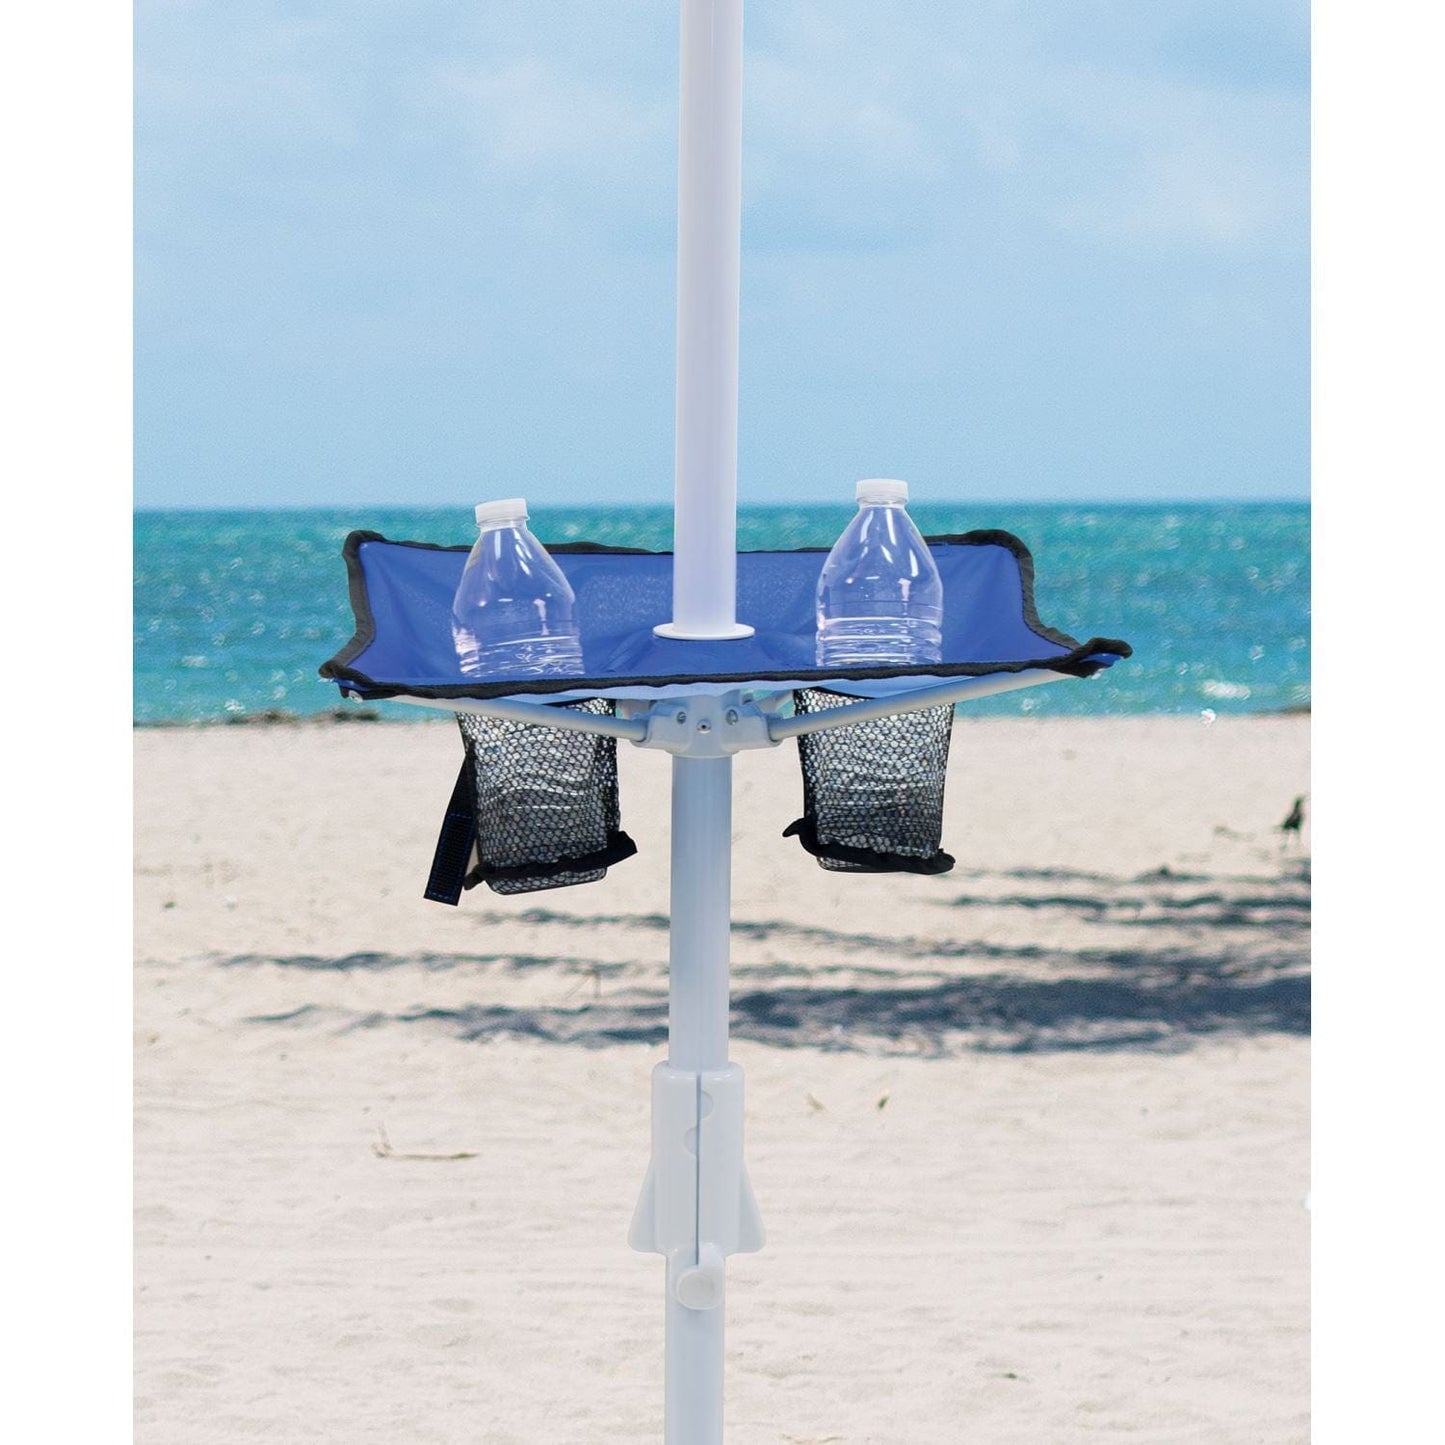 RIO Beach Umbrella RIO | 7 ft. Umbrella with Integrated Sand Anchor - Blue Stripes UBT723-2019-1